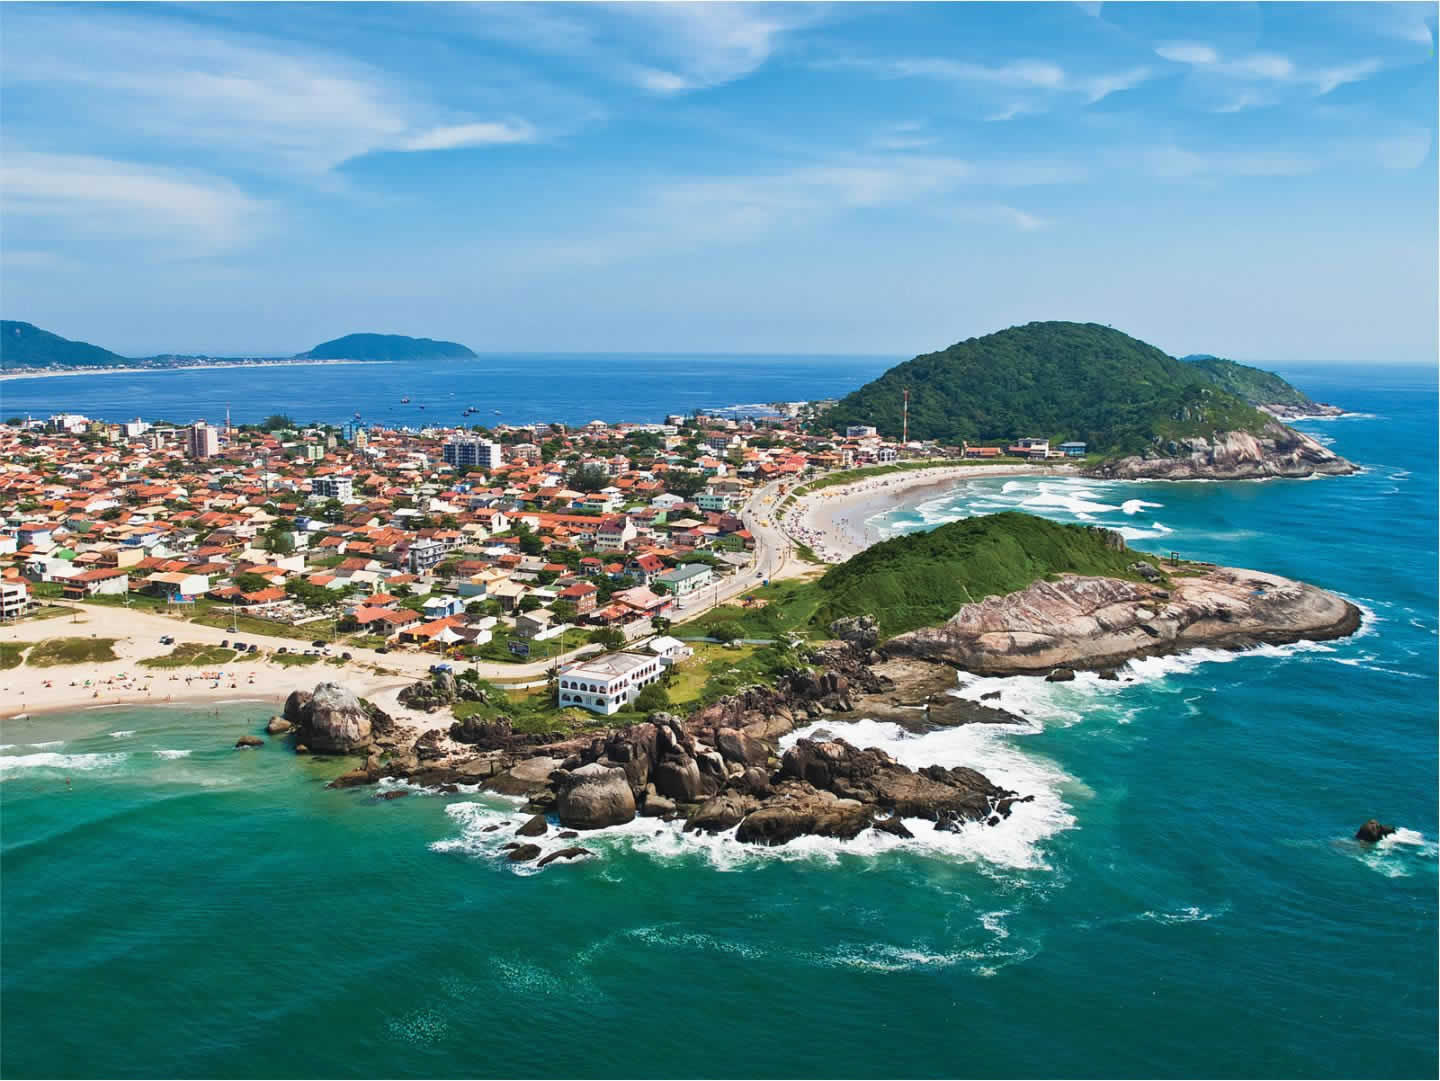 Guia para aproveitar o litoral de Santa Catarina ao máximo